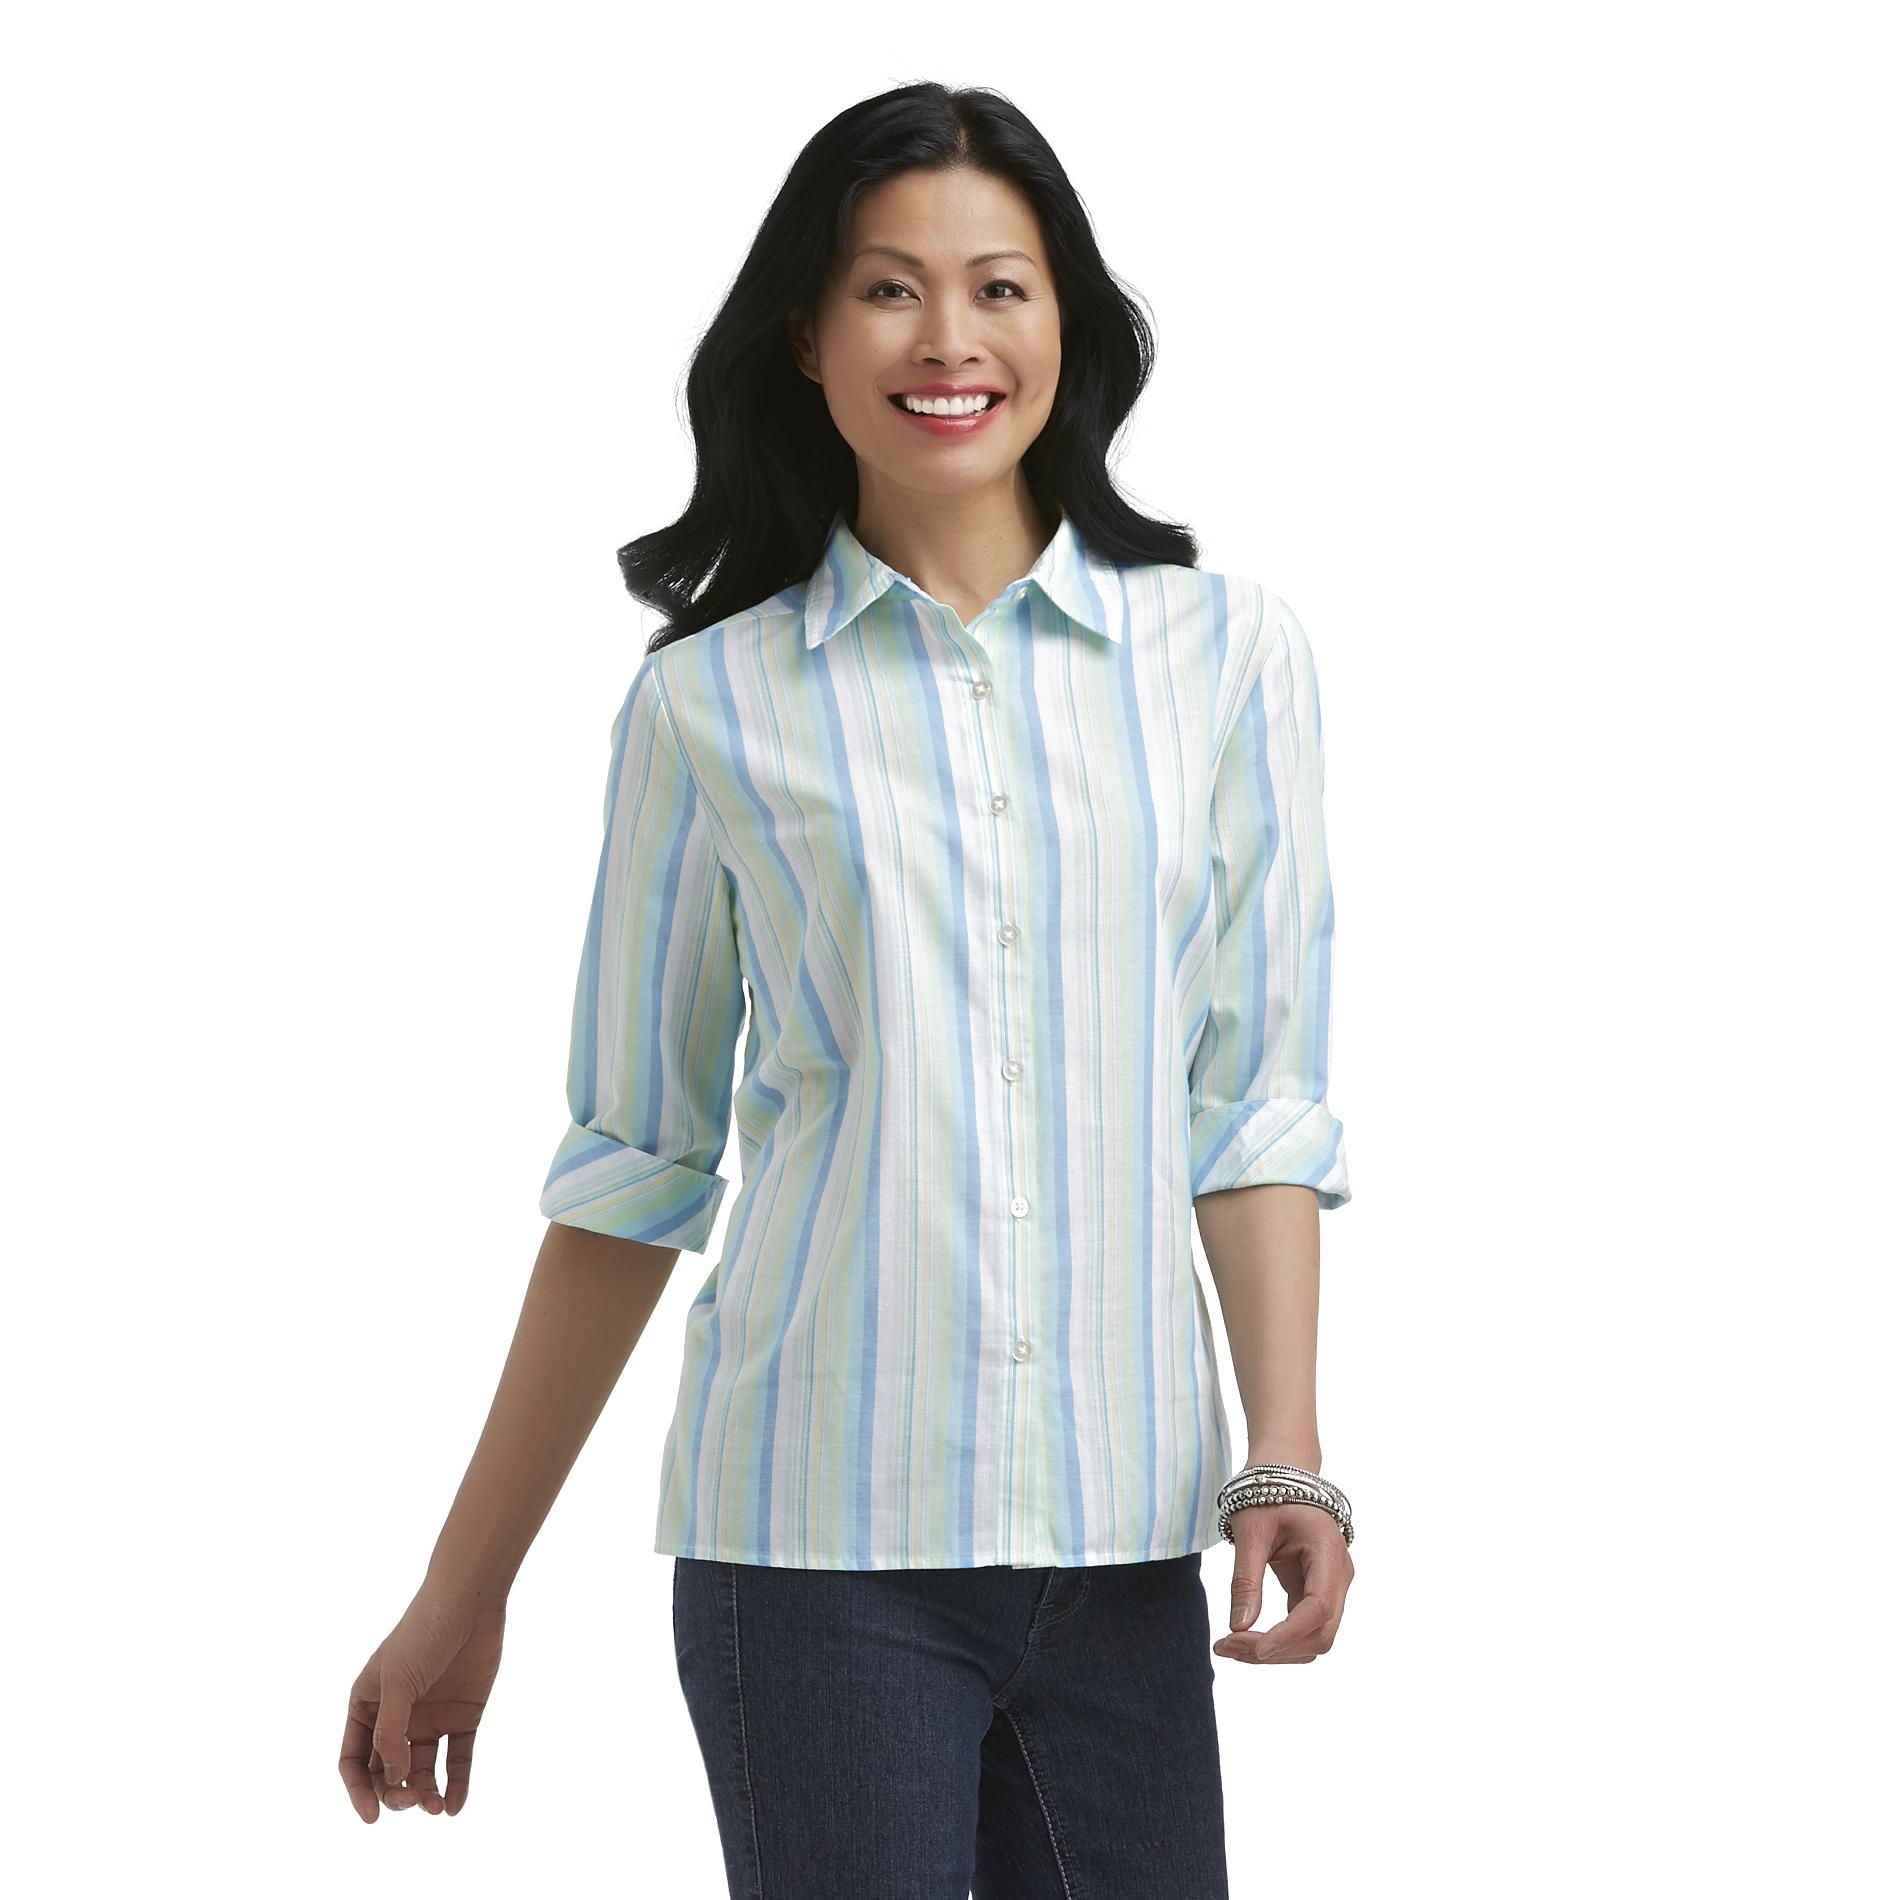 Chic Women's Three-Quarter Sleeve Shirt - Striped